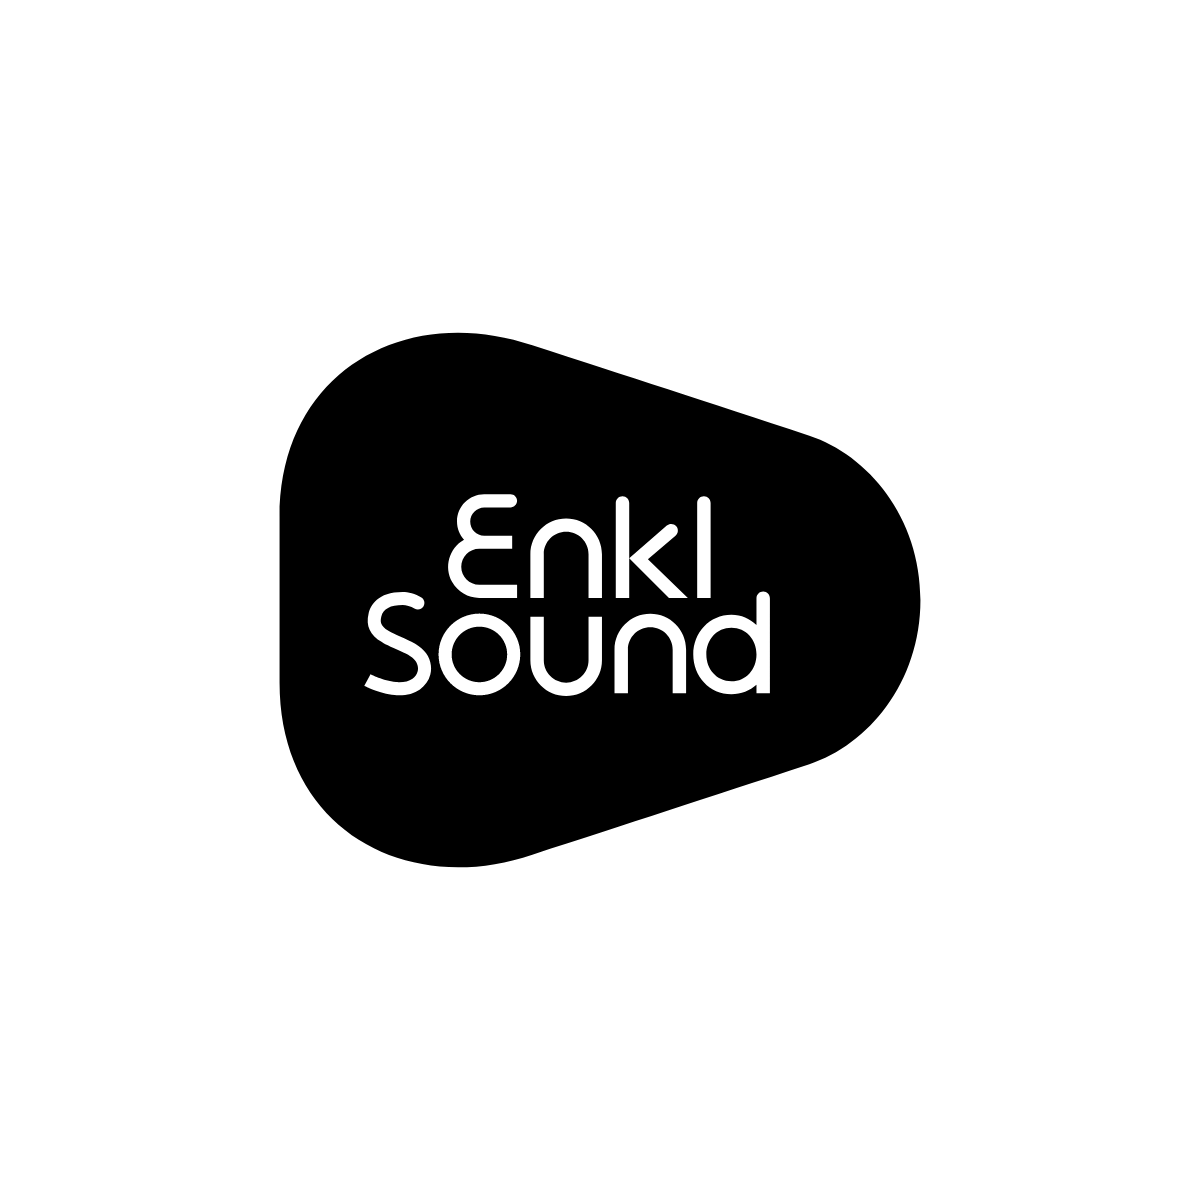 Enkl Sound Copenhagen